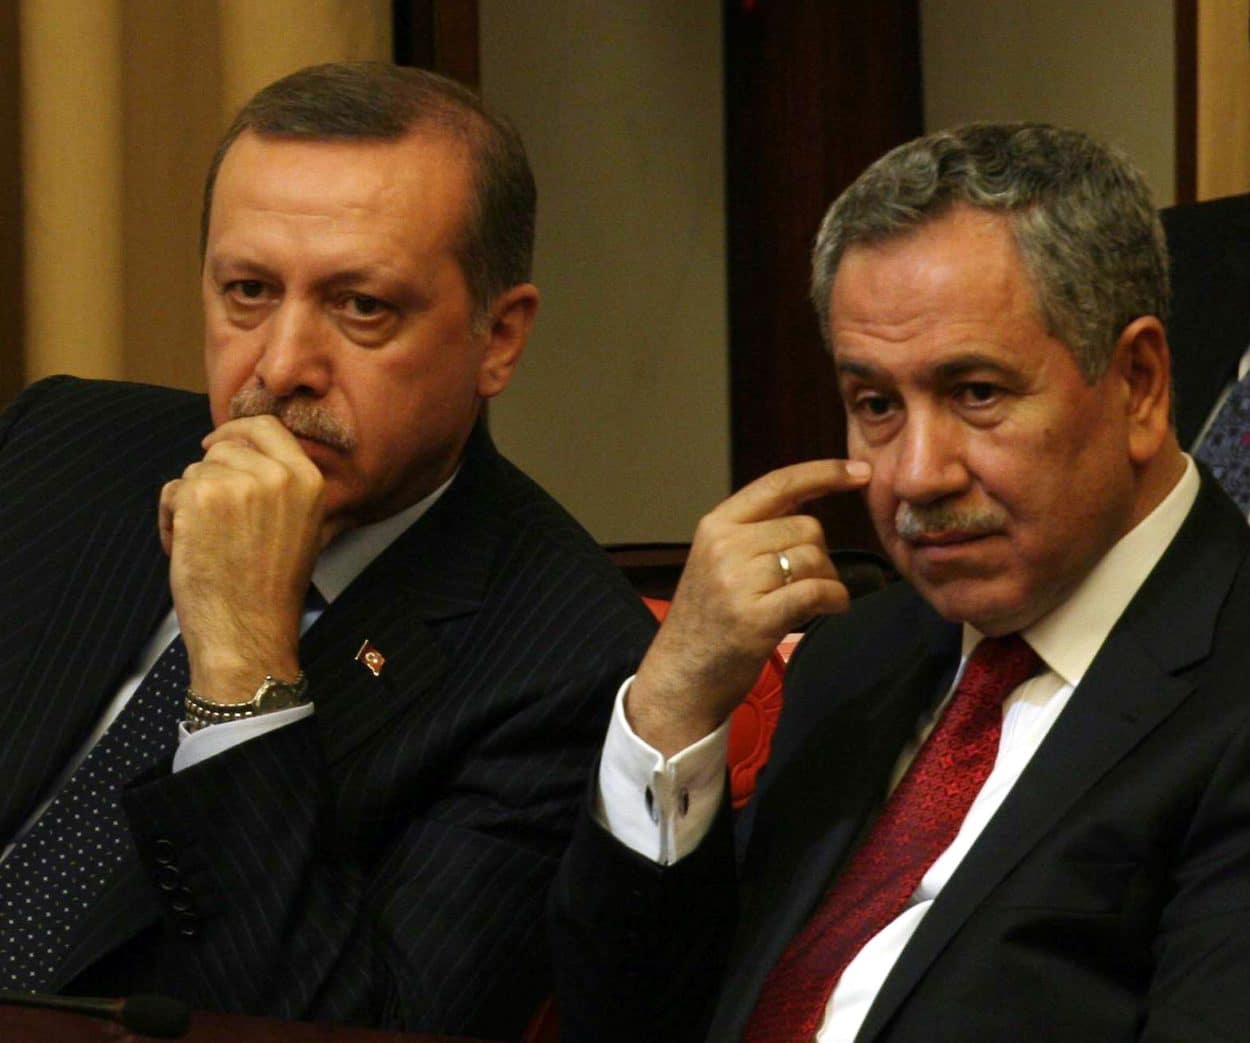 Bülent Arınç und Recep Tayyip Erdoğan